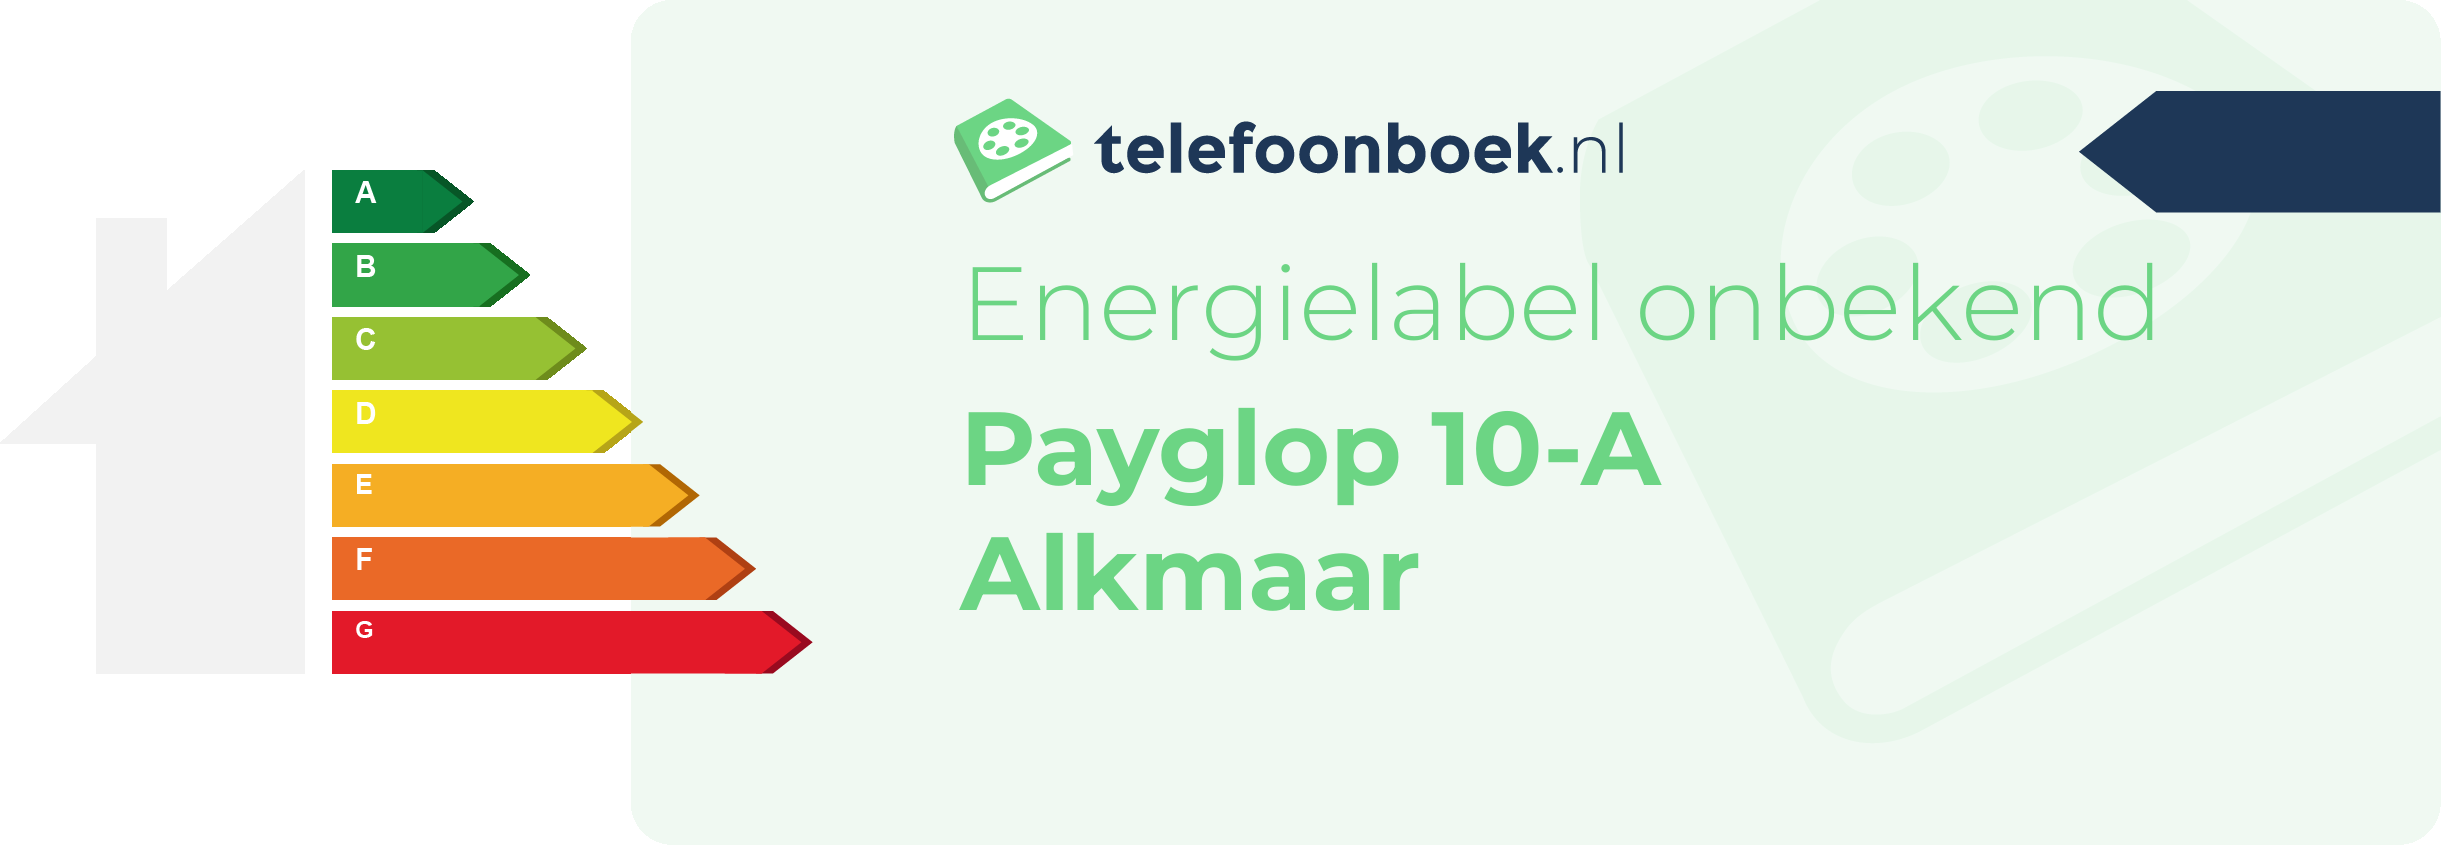 Energielabel Payglop 10-A Alkmaar